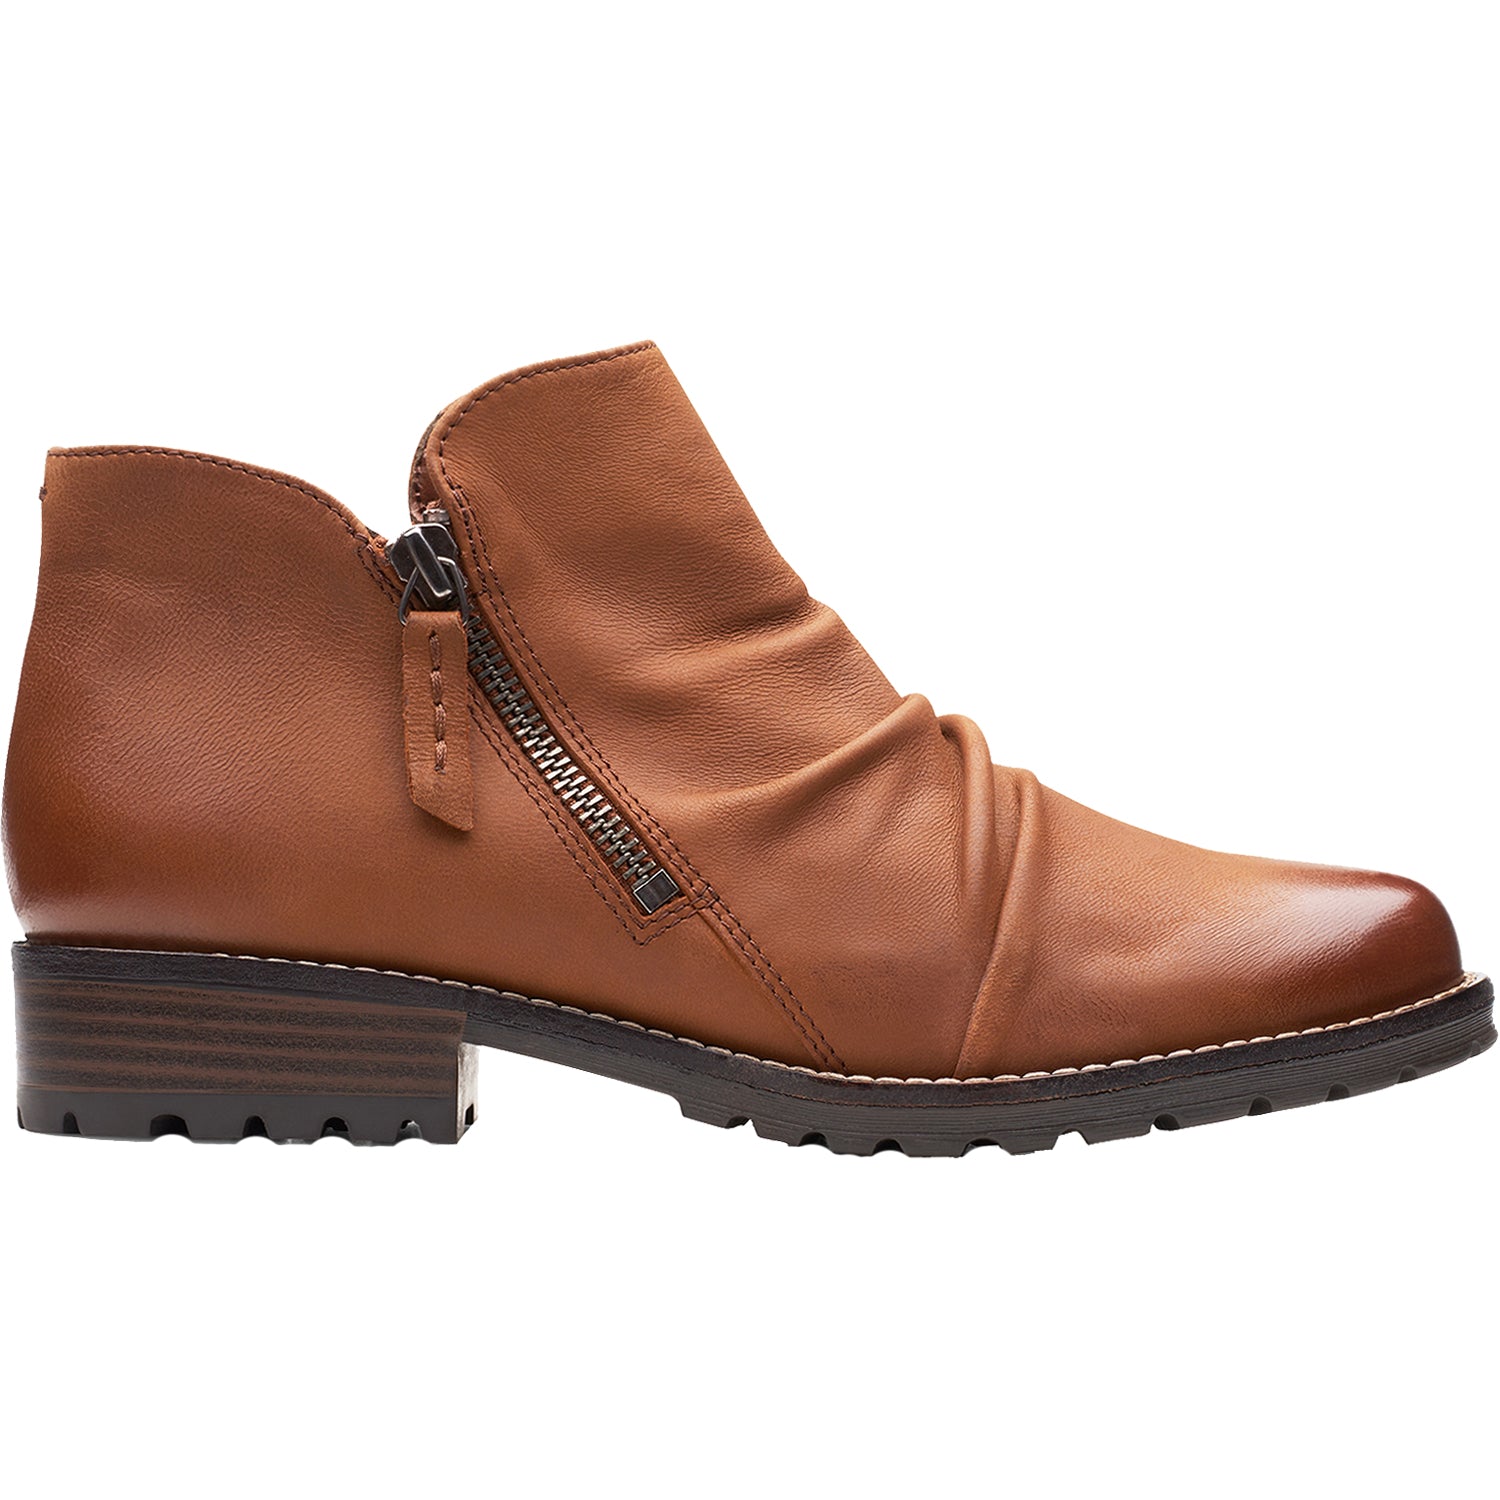 Clarks Clarkwell Zip | Women's Leather Ankle Boots | Footwear etc.